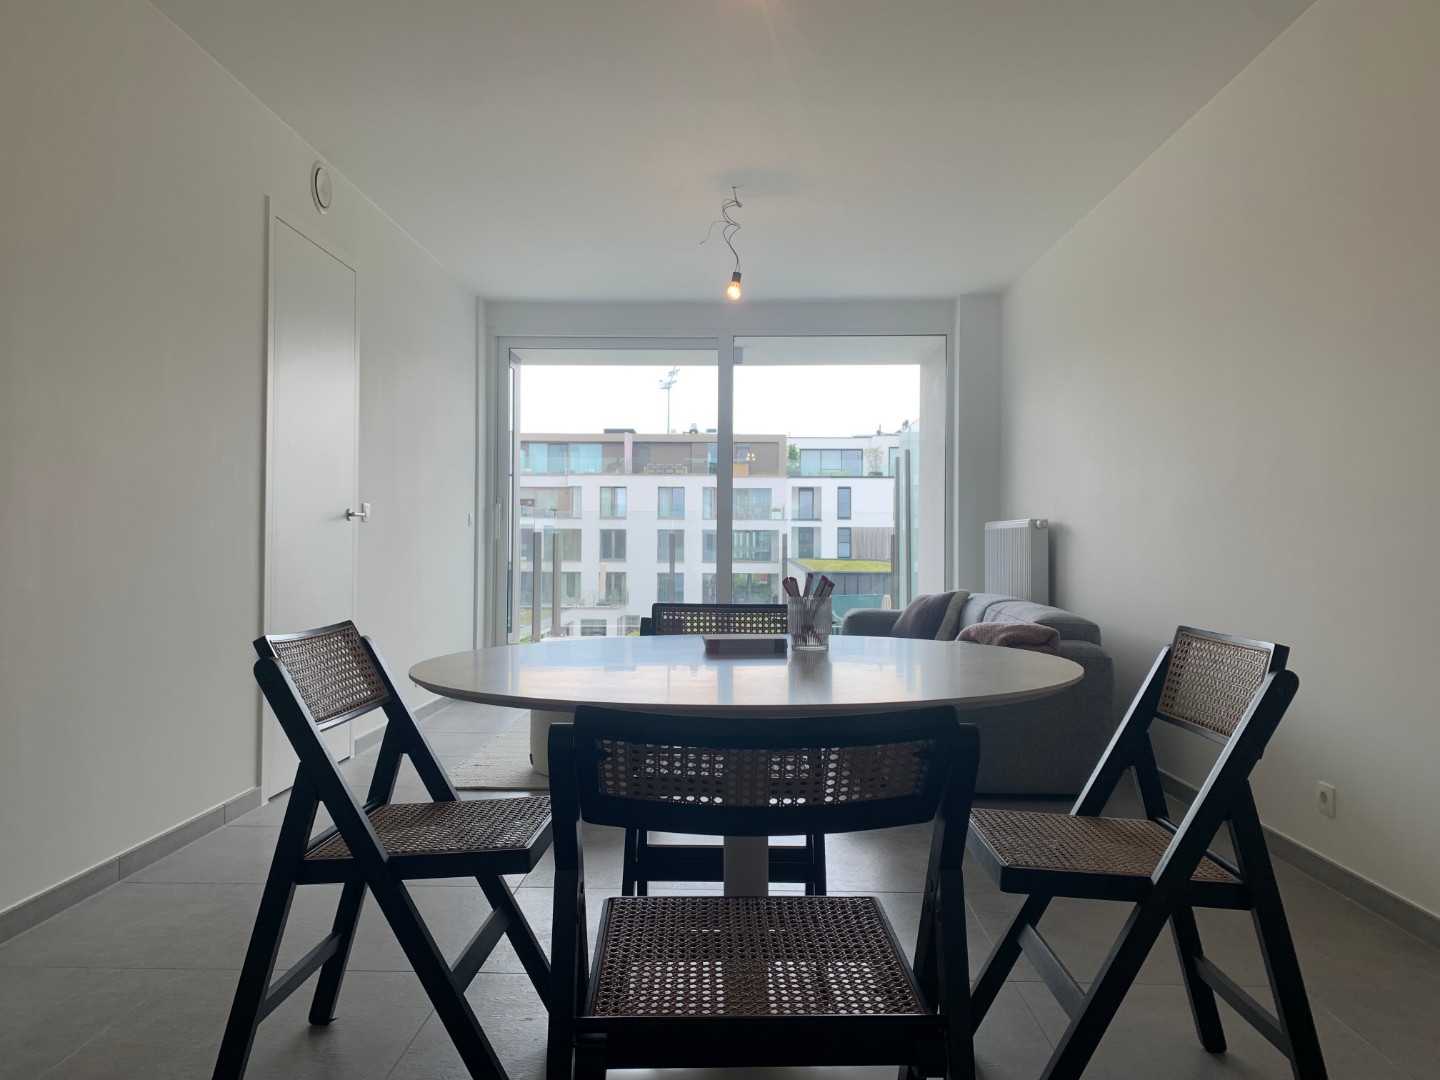 Appartement te koop in Waregem | Vlaemynck Vastgoed